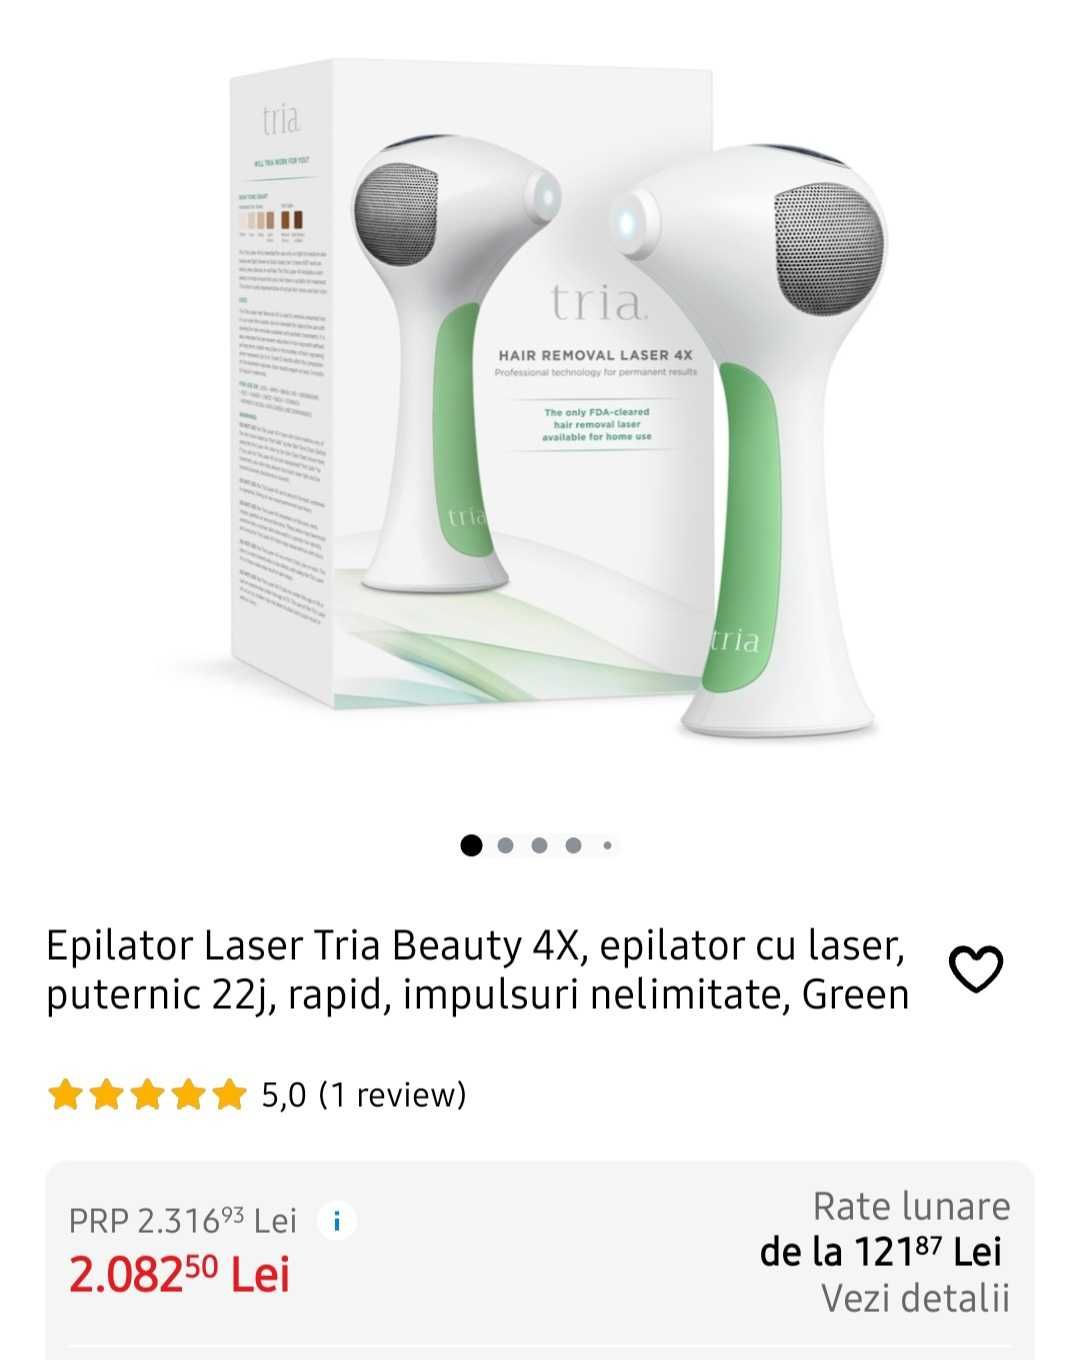 Epilator laser Tria Beauty 4x